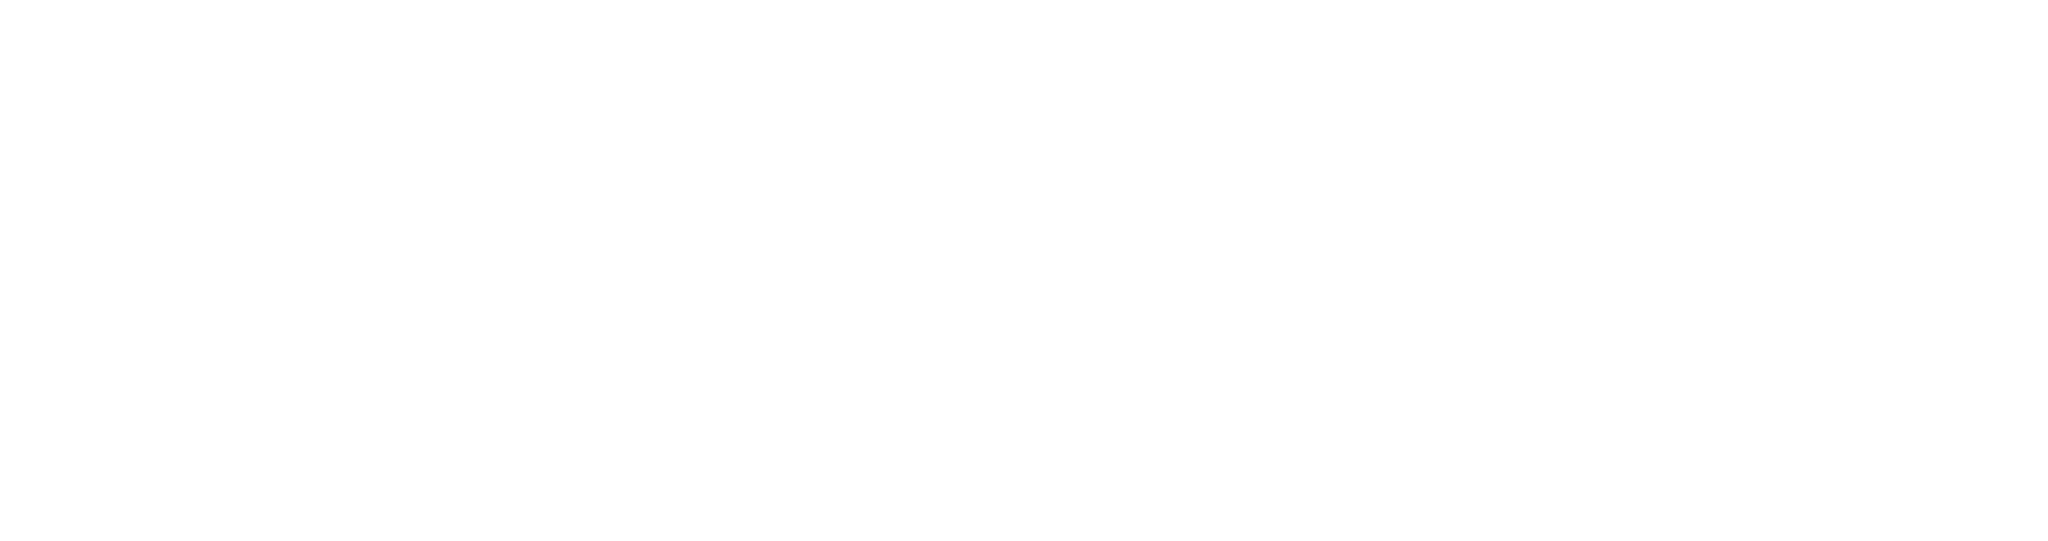 Polycom_logo-Blanc.png